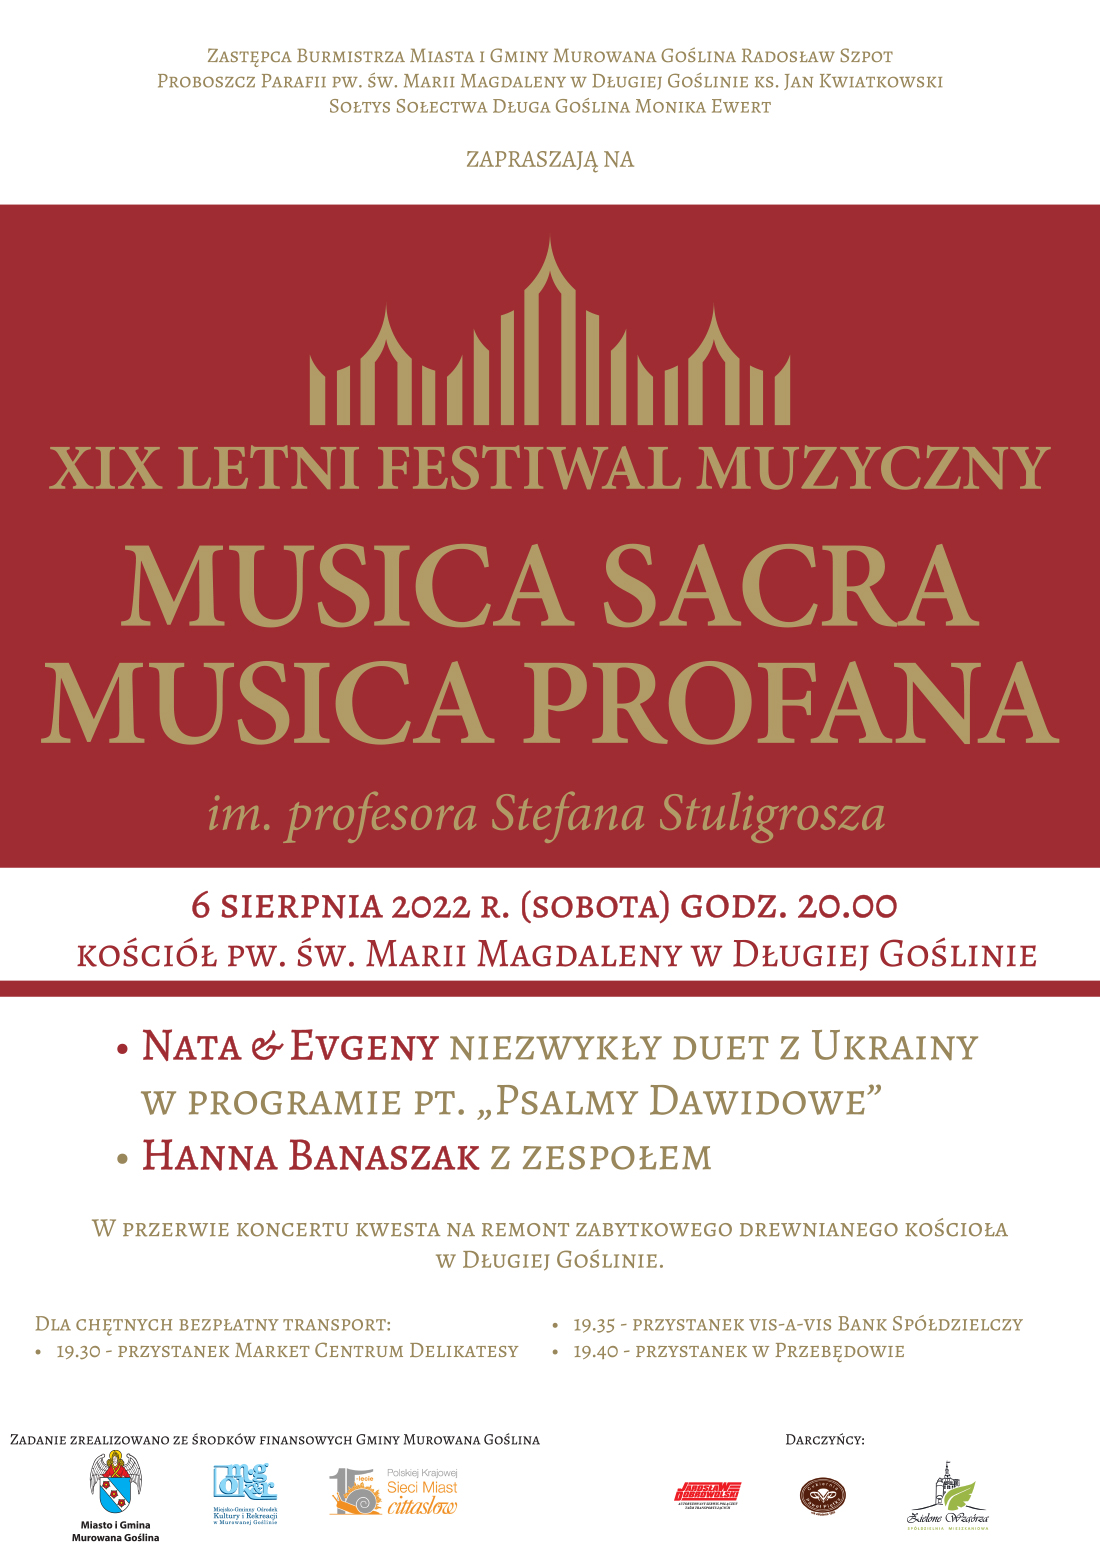 Musica Sacra Musica Profana 2022 r.